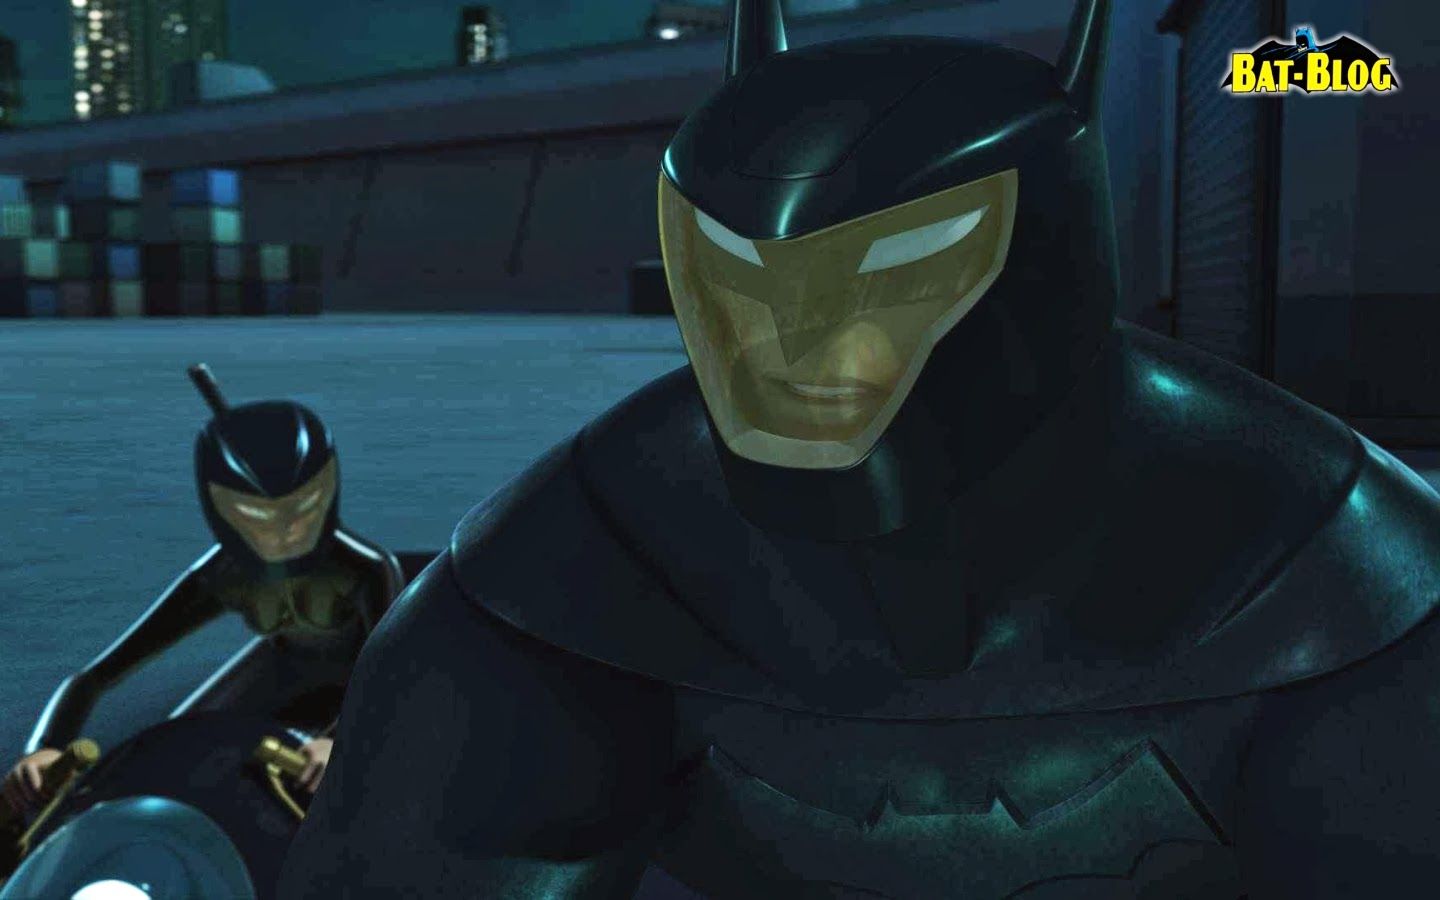 New BEWARE THE BATMAN WALLPAPERS # 11 “Instinct” About Batman